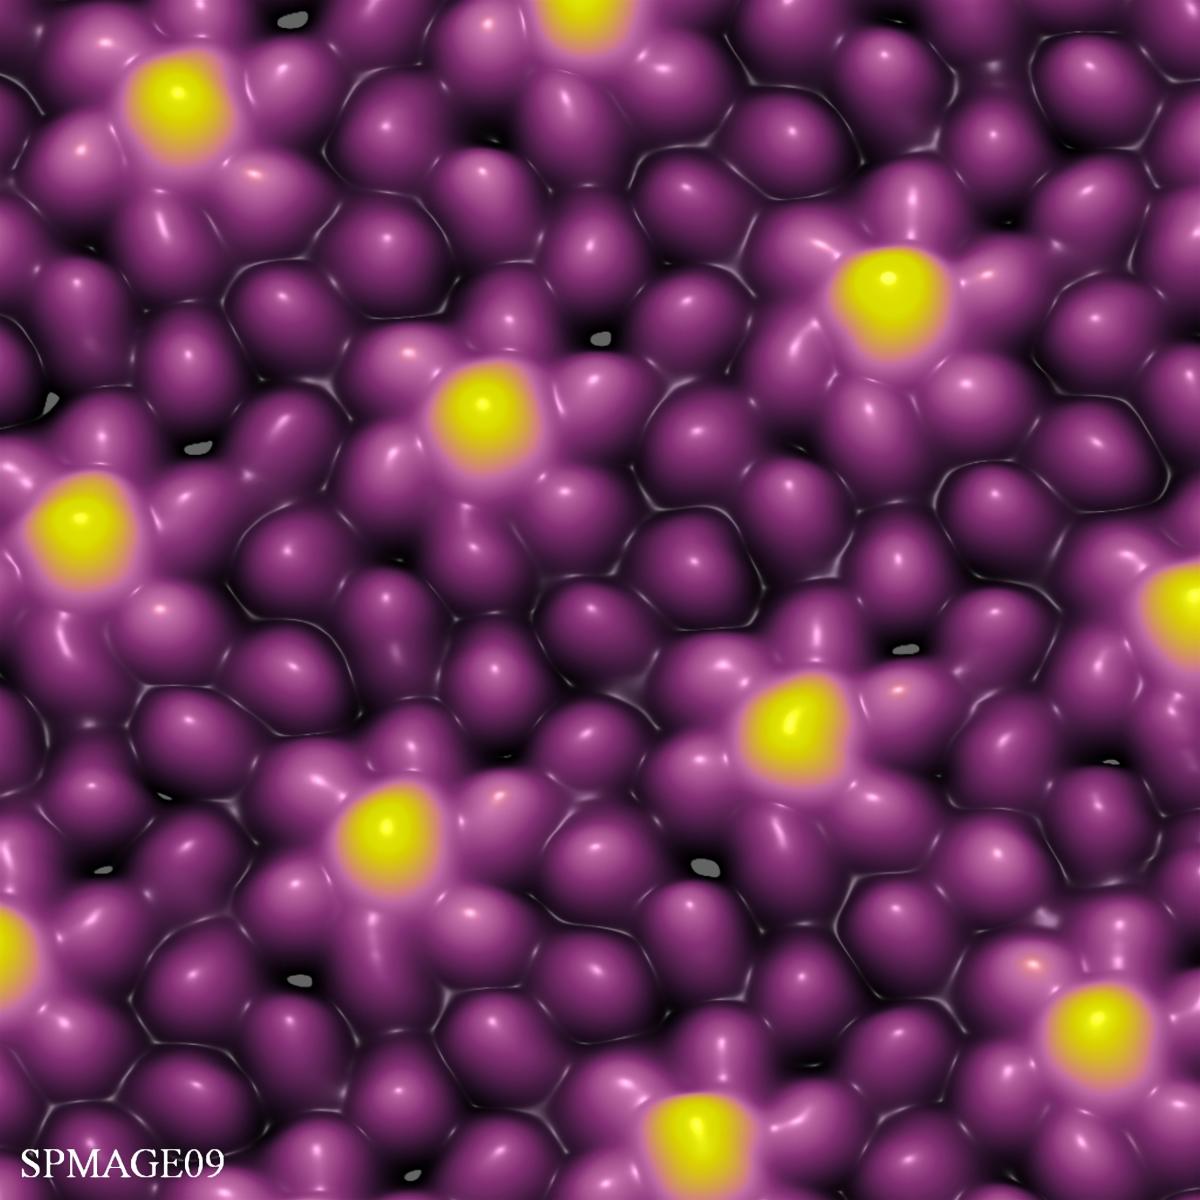 Nanovioleta